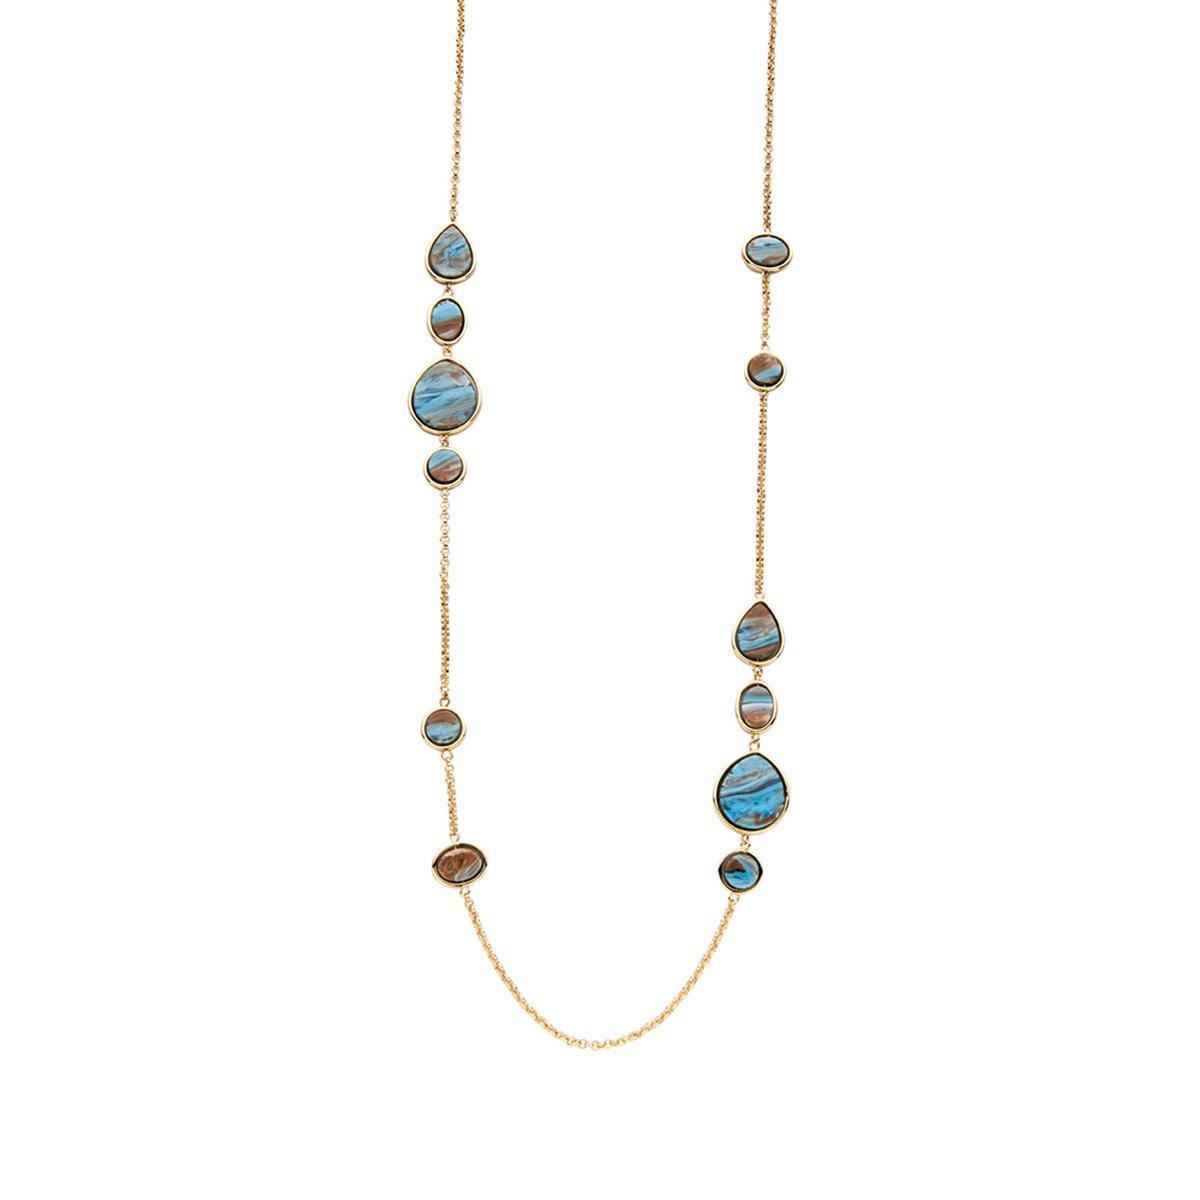 Les Cordes - Halsketting - Collier - KENZIELANG - Kleur Blauw - Metaal - Sieraad Dames - Juwelen - Statement ketting